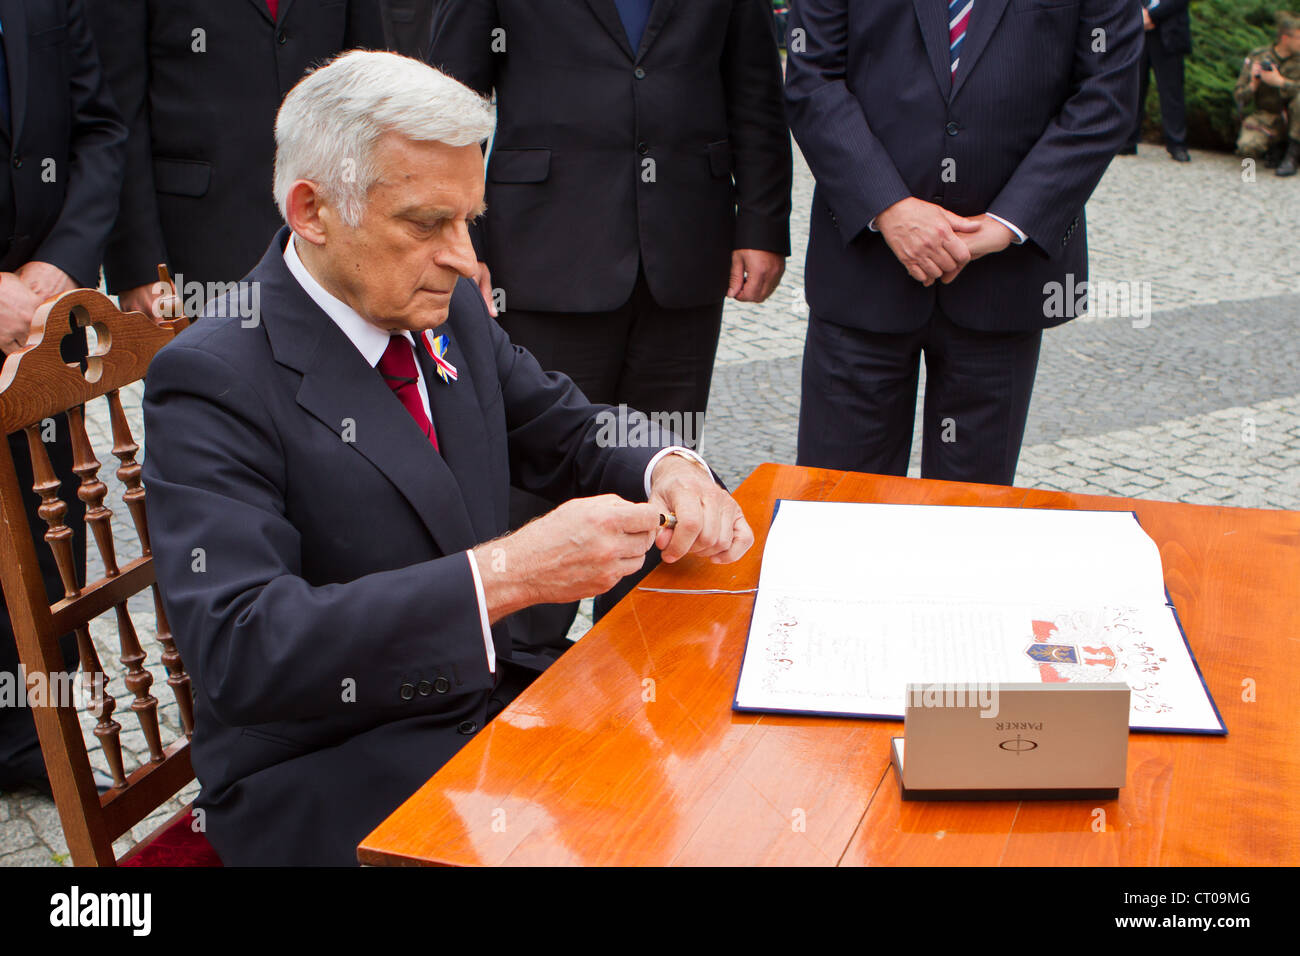 Jerzy Buzek - polnischer Politiker (2009-2012 Präsident des Europäischen Parlaments). Stockfoto